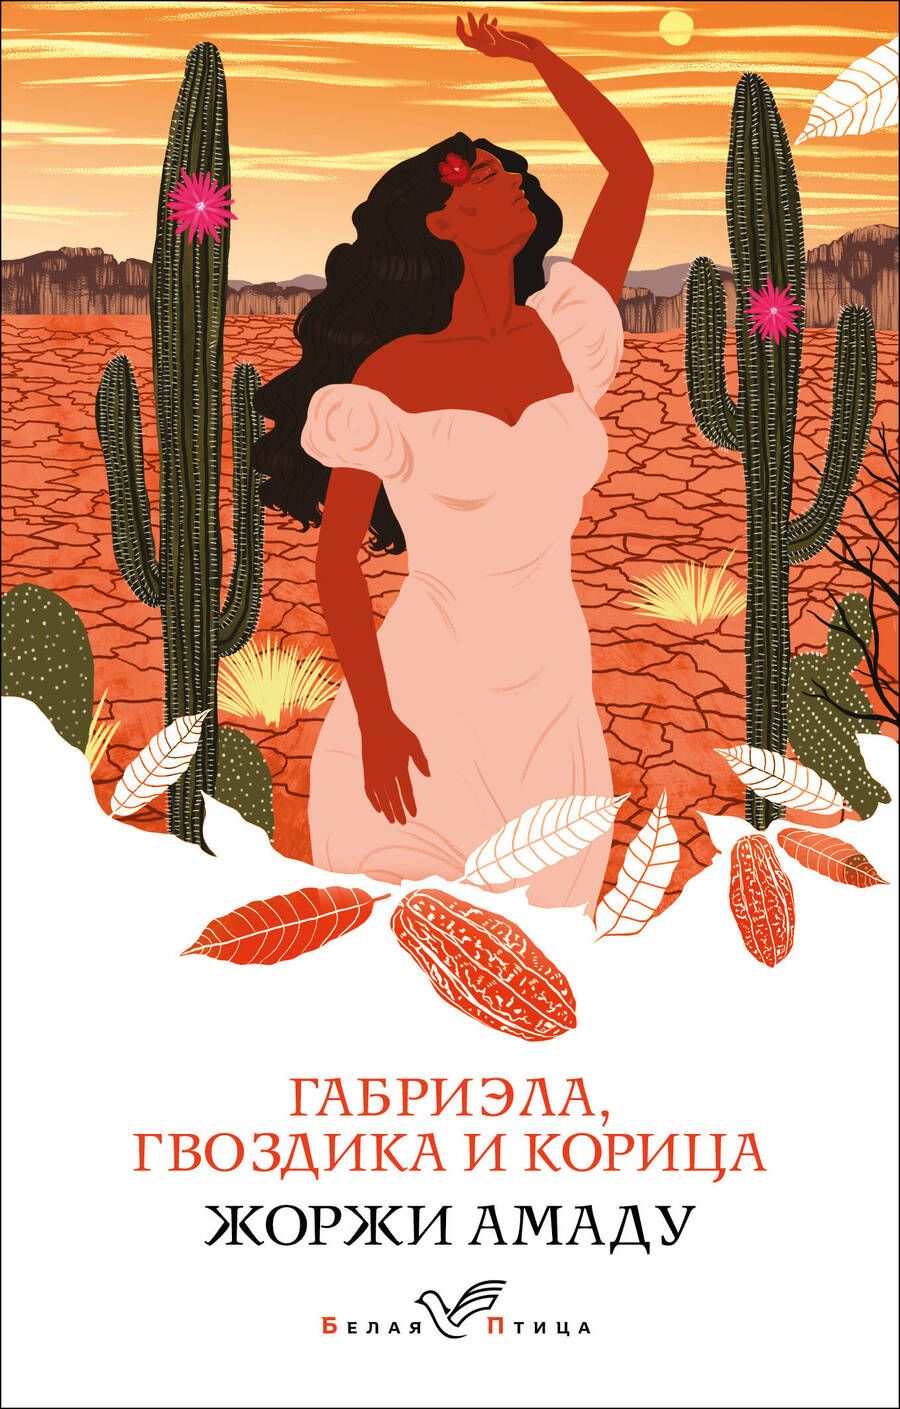 Обложка книги "Амаду: Габриэла, гвоздика и корица"